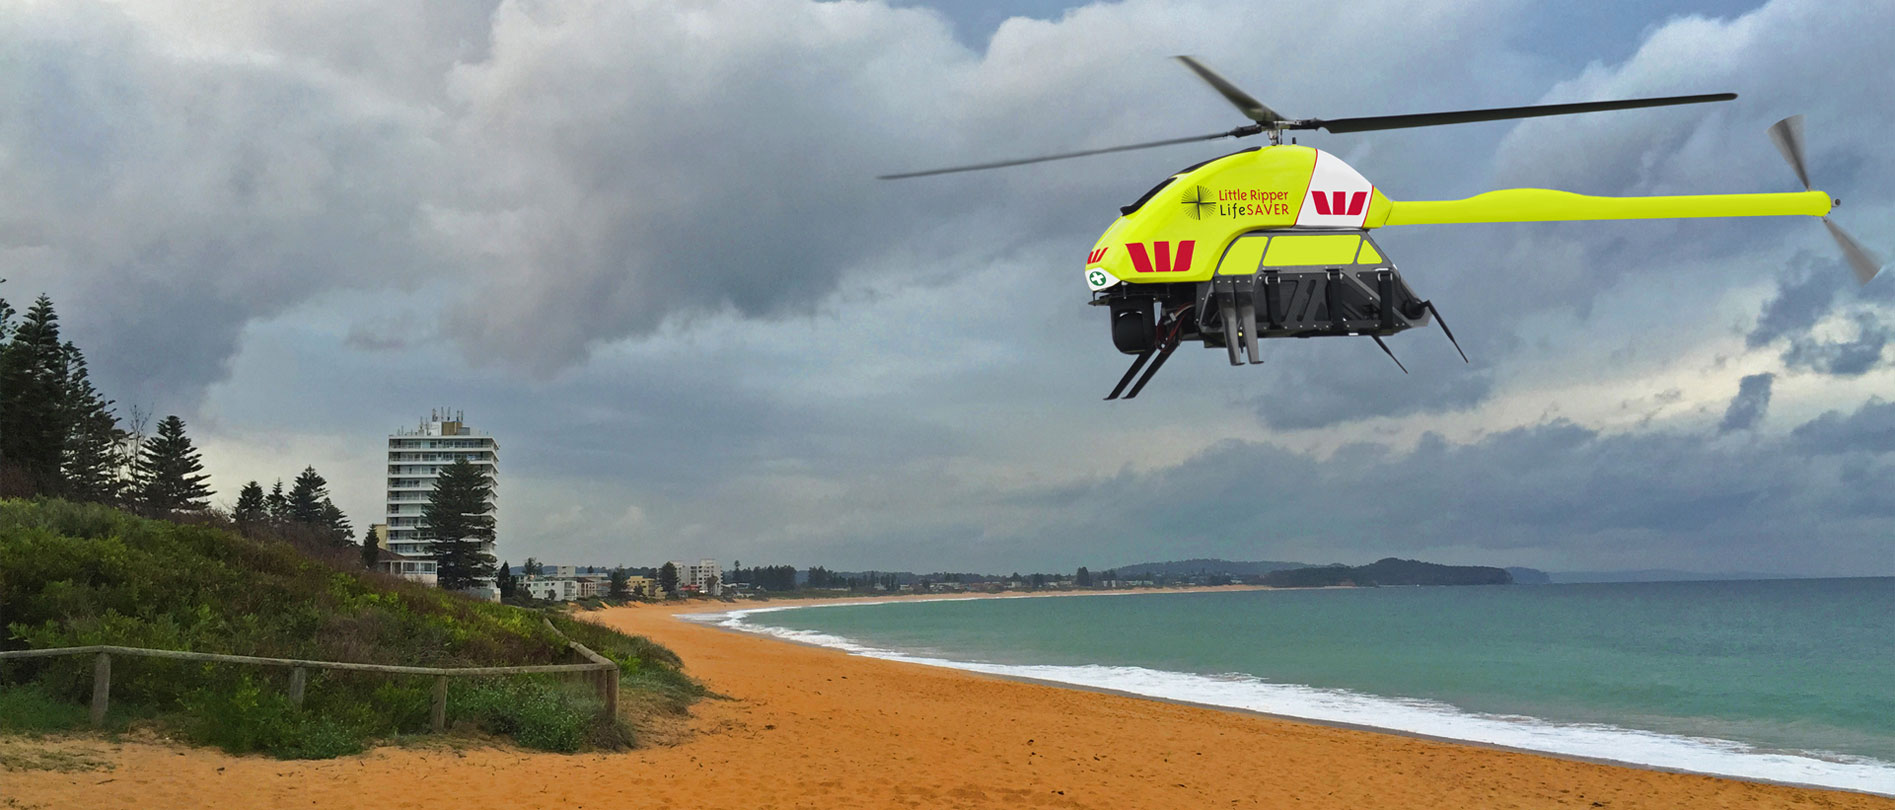 Little Ripper Lifeguard Drone Saves Two Off Australian Coast